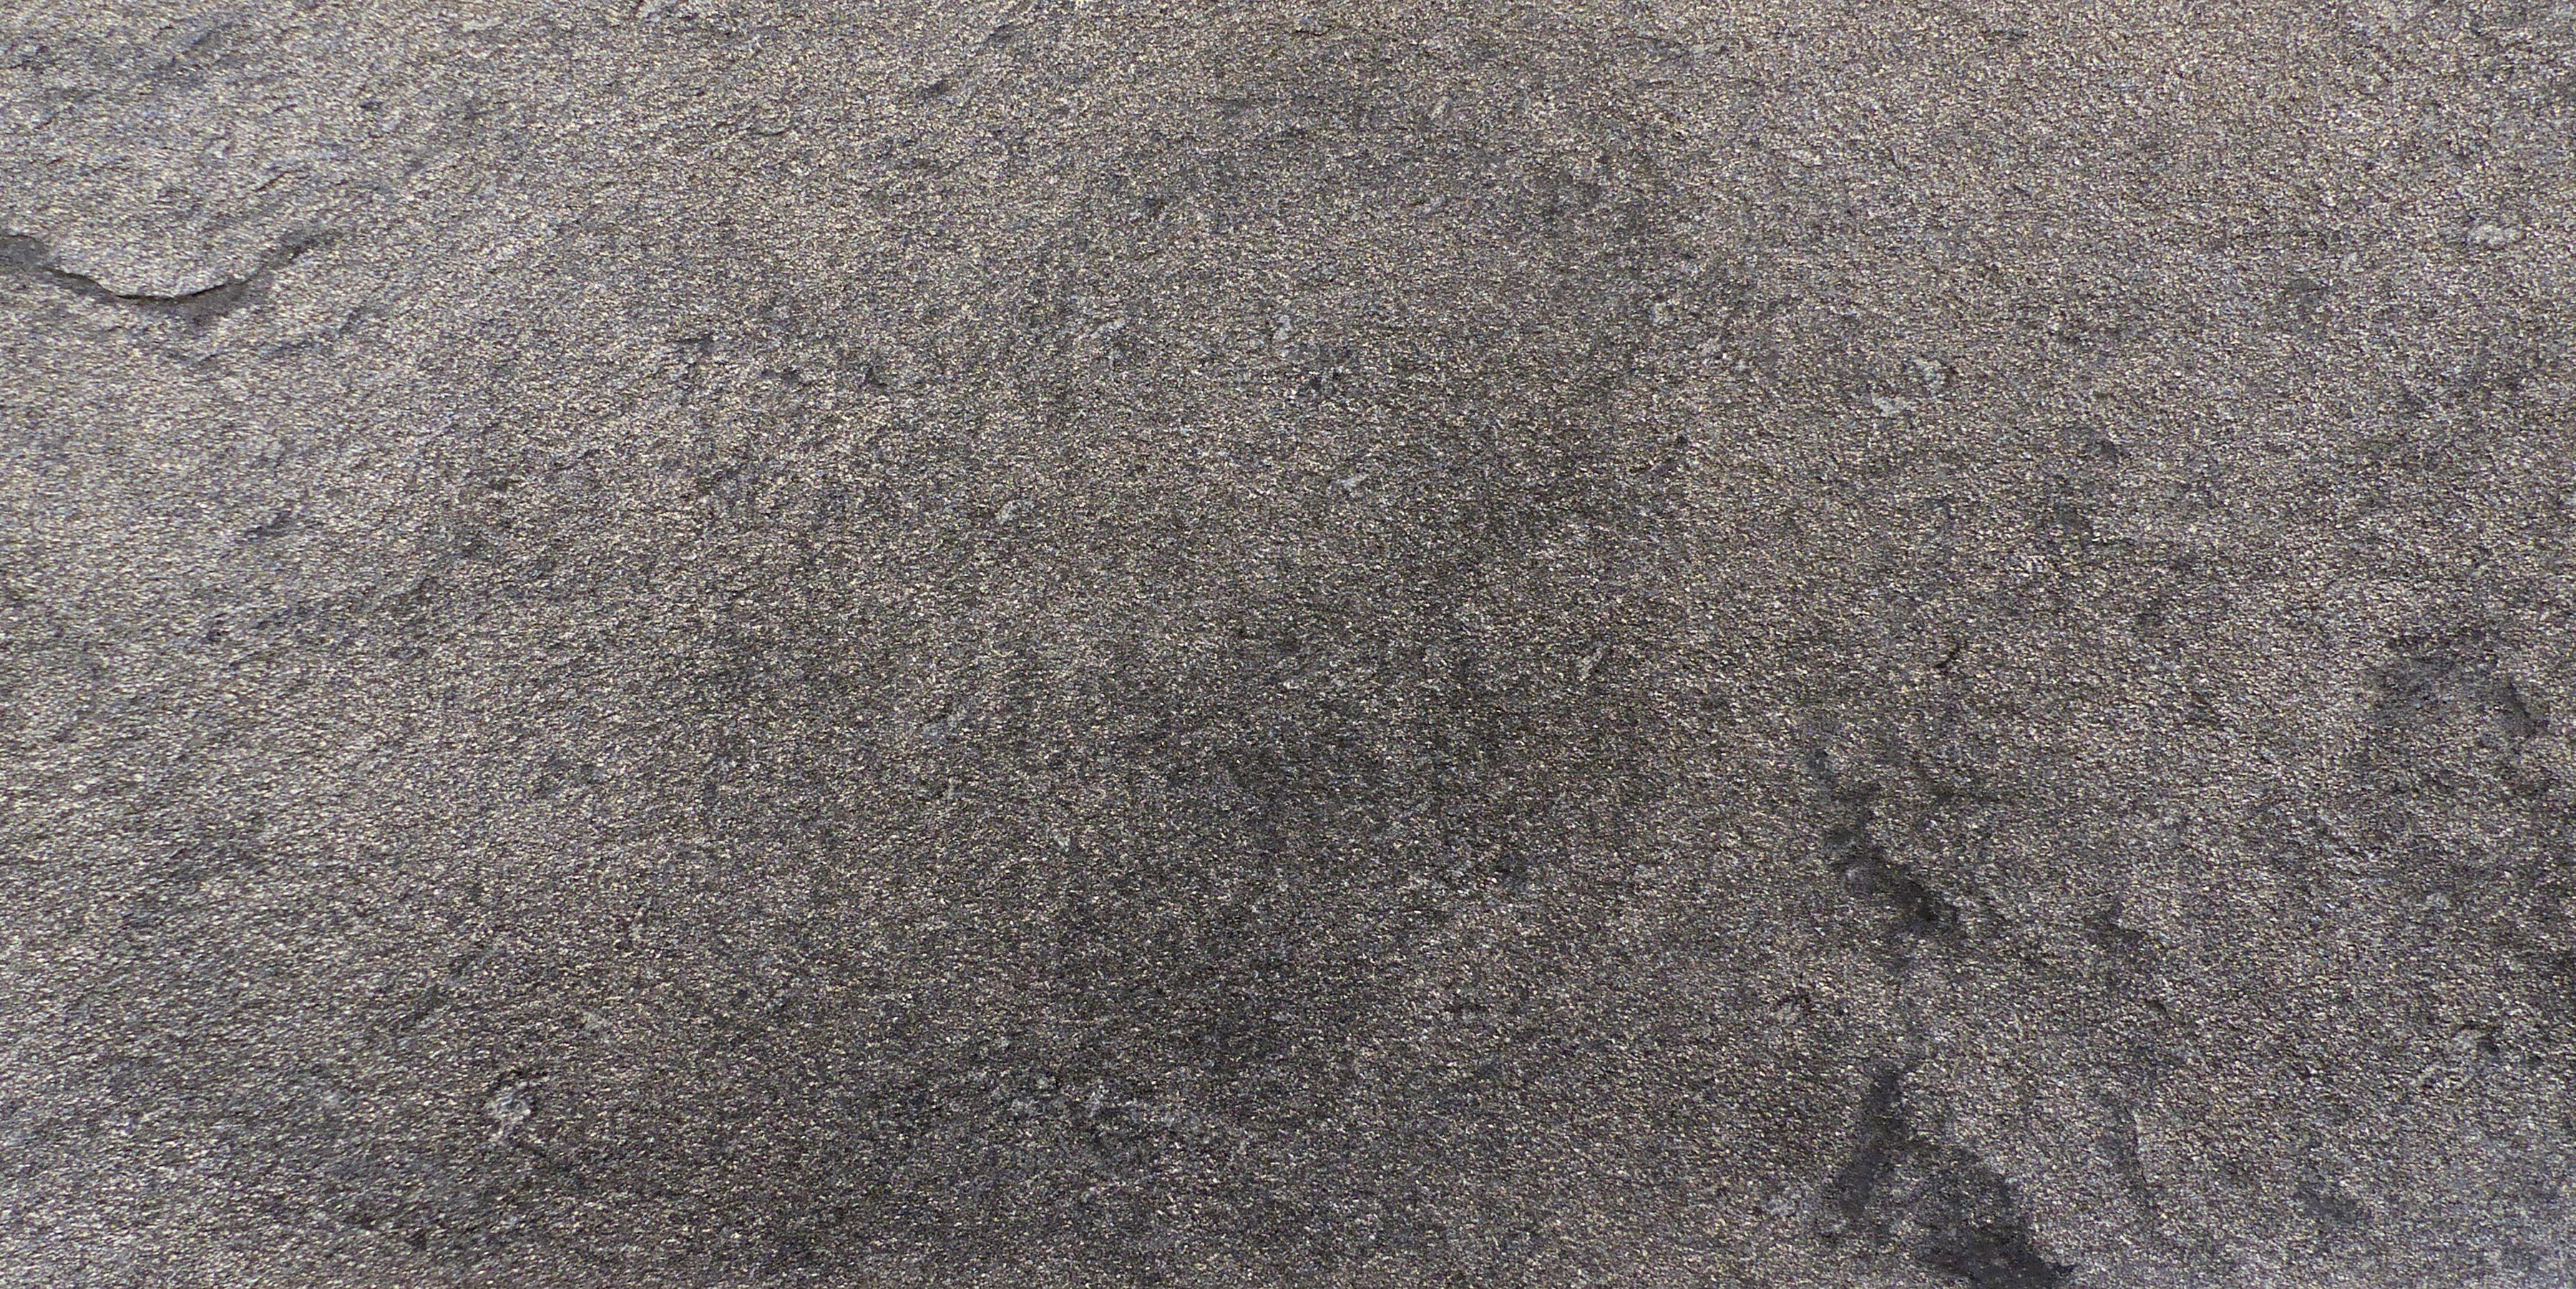 Slate (1-tlg) 2,88 Lite BxL: 120x240 cm, Black Echtstein Wandpaneel qm, Pearl, aus